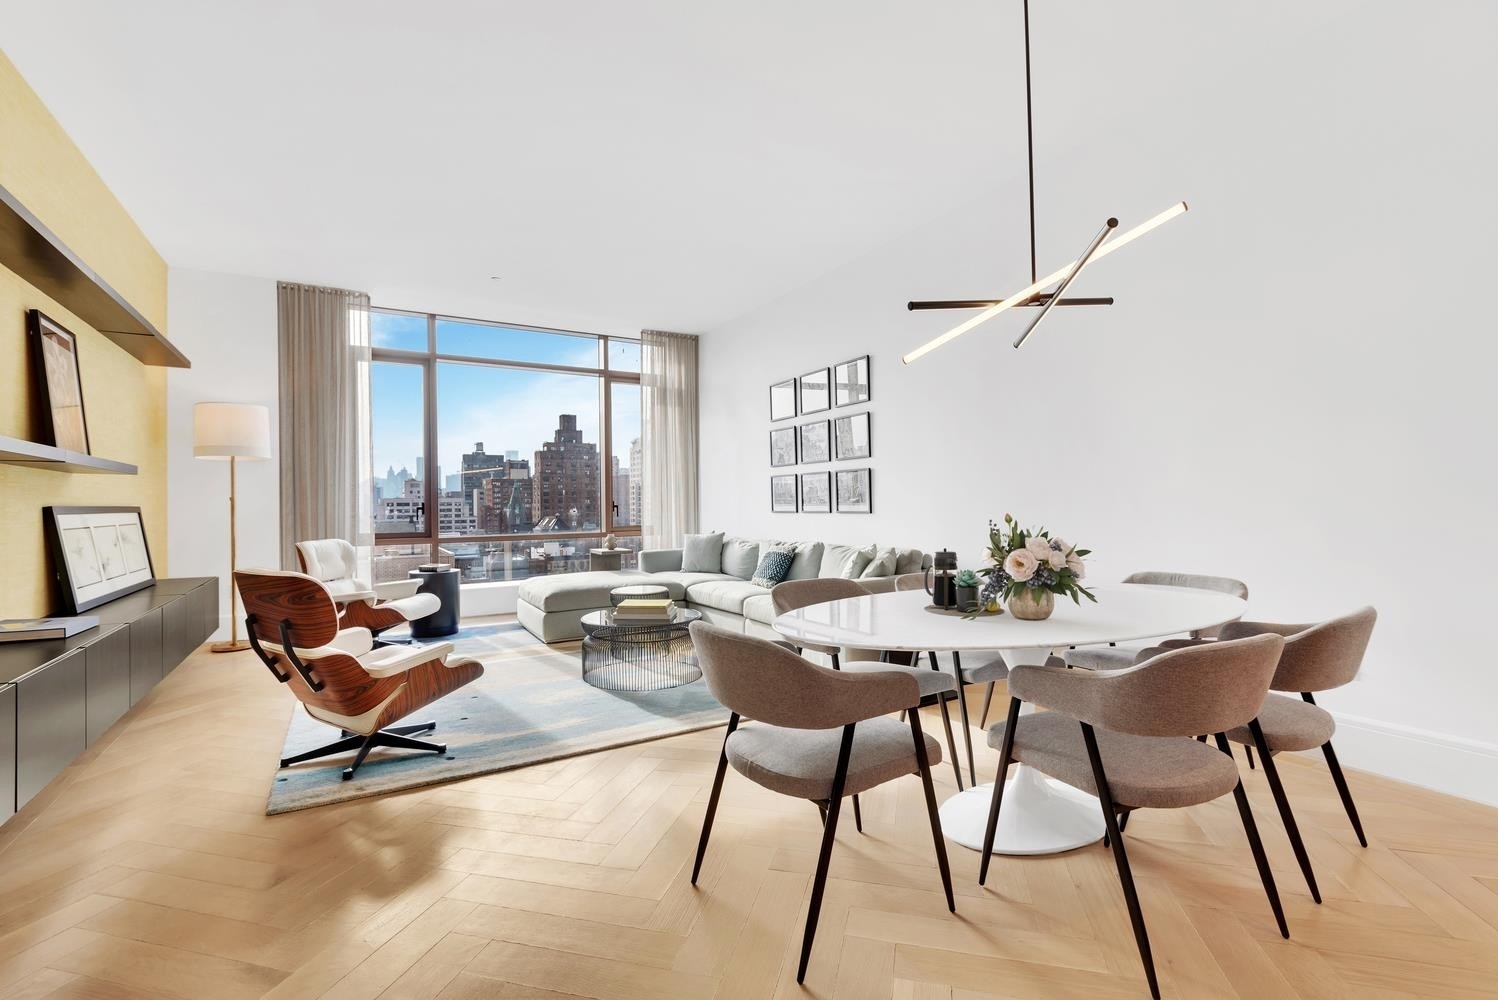 Condominium for Sale at Gramercy Square, 215 E 19TH ST, 6H Gramercy Park, New York, New York 10003